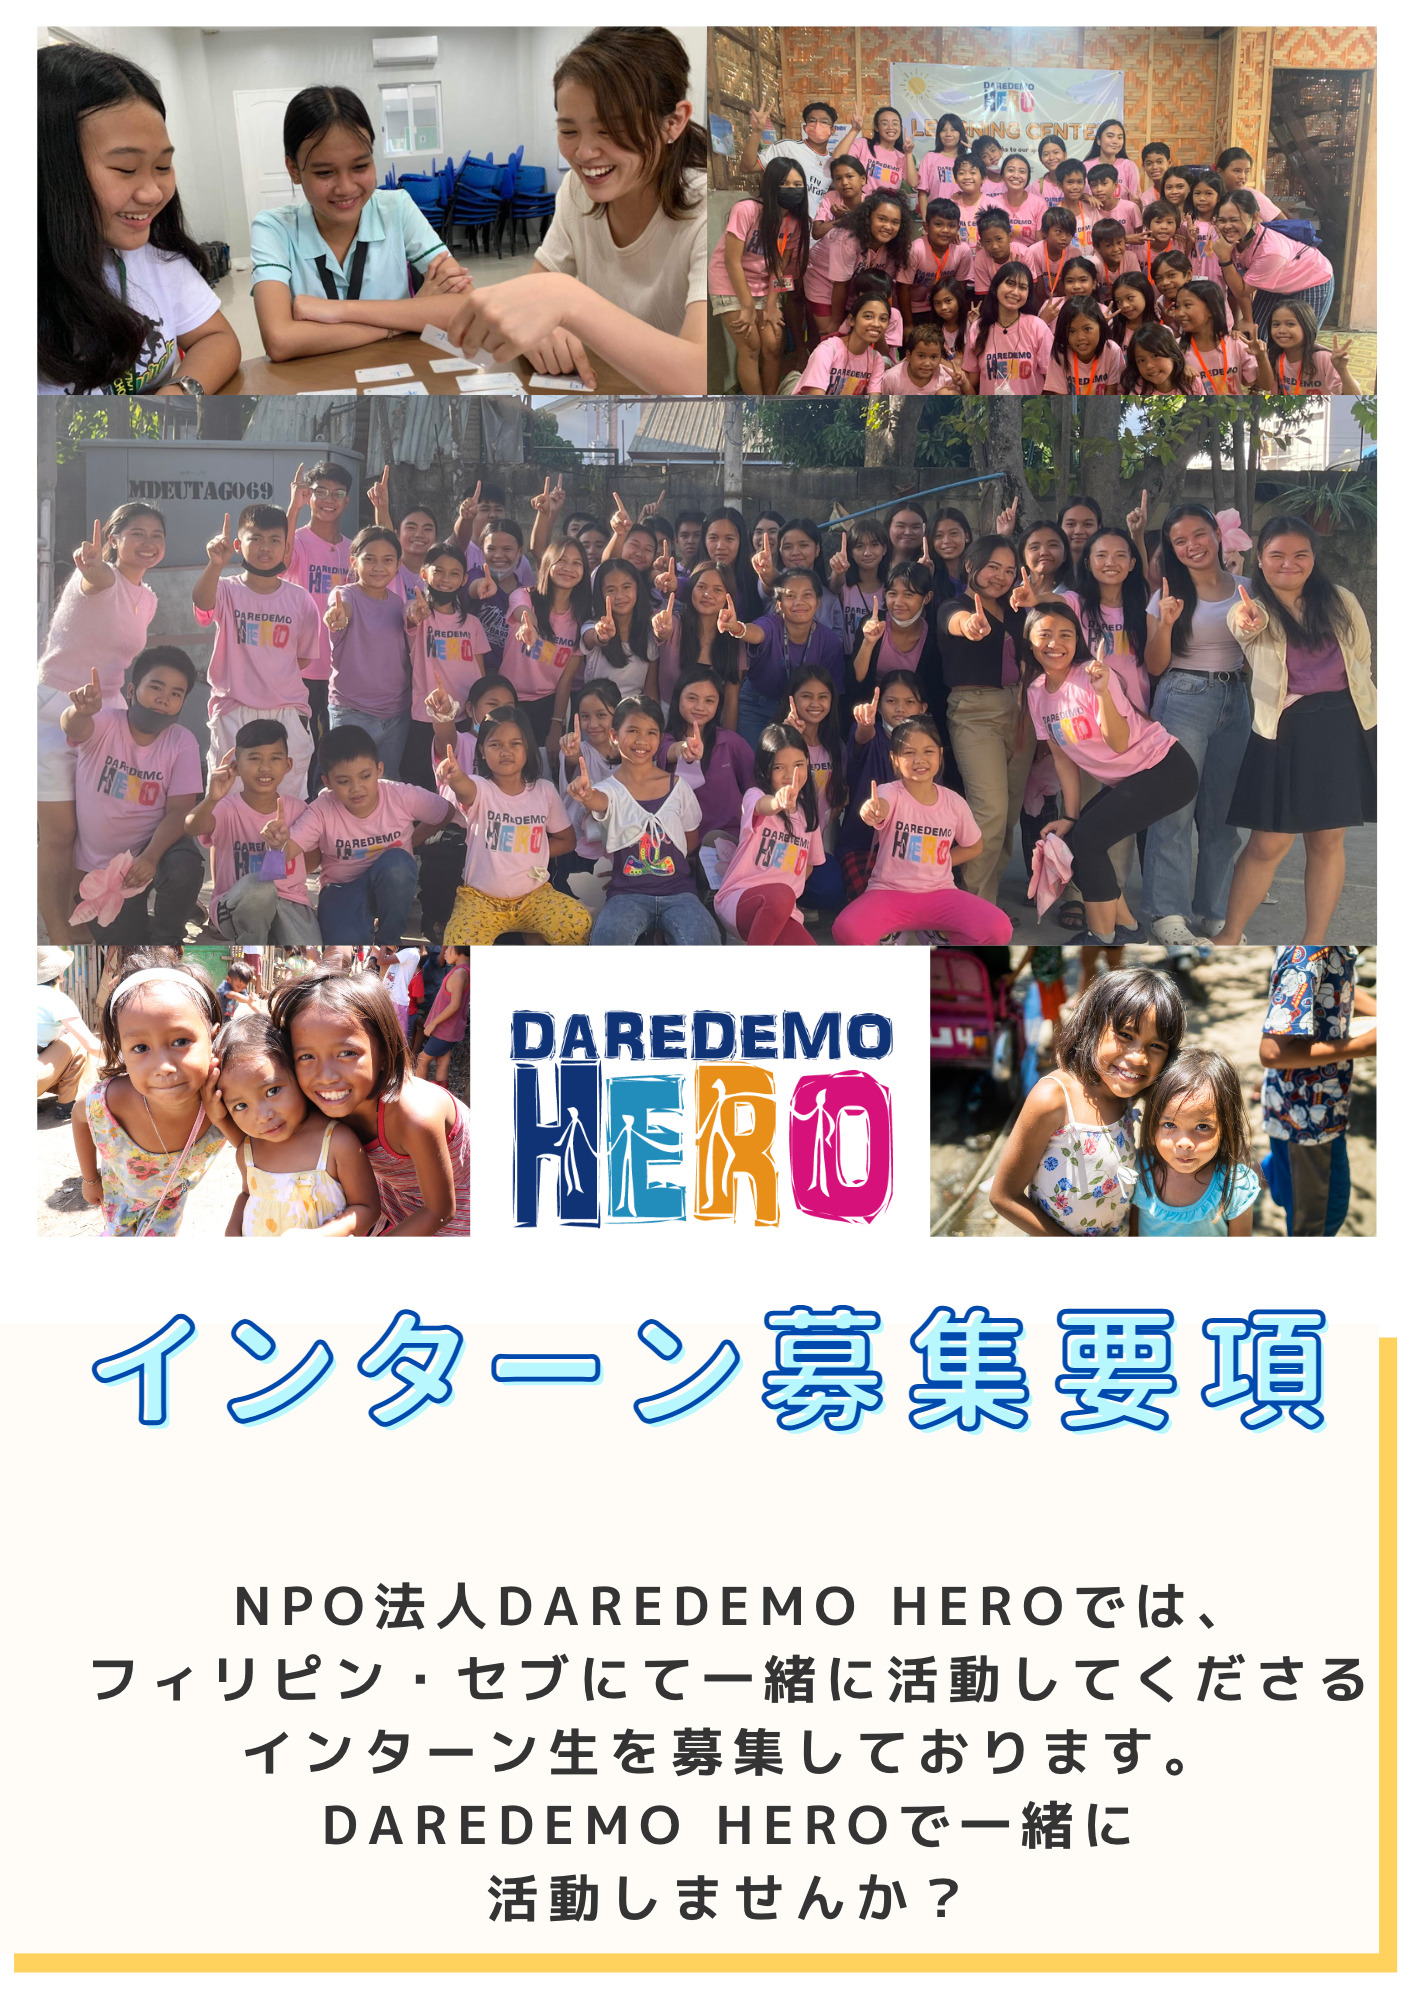 DAREDEMO HEROインターン募集!!